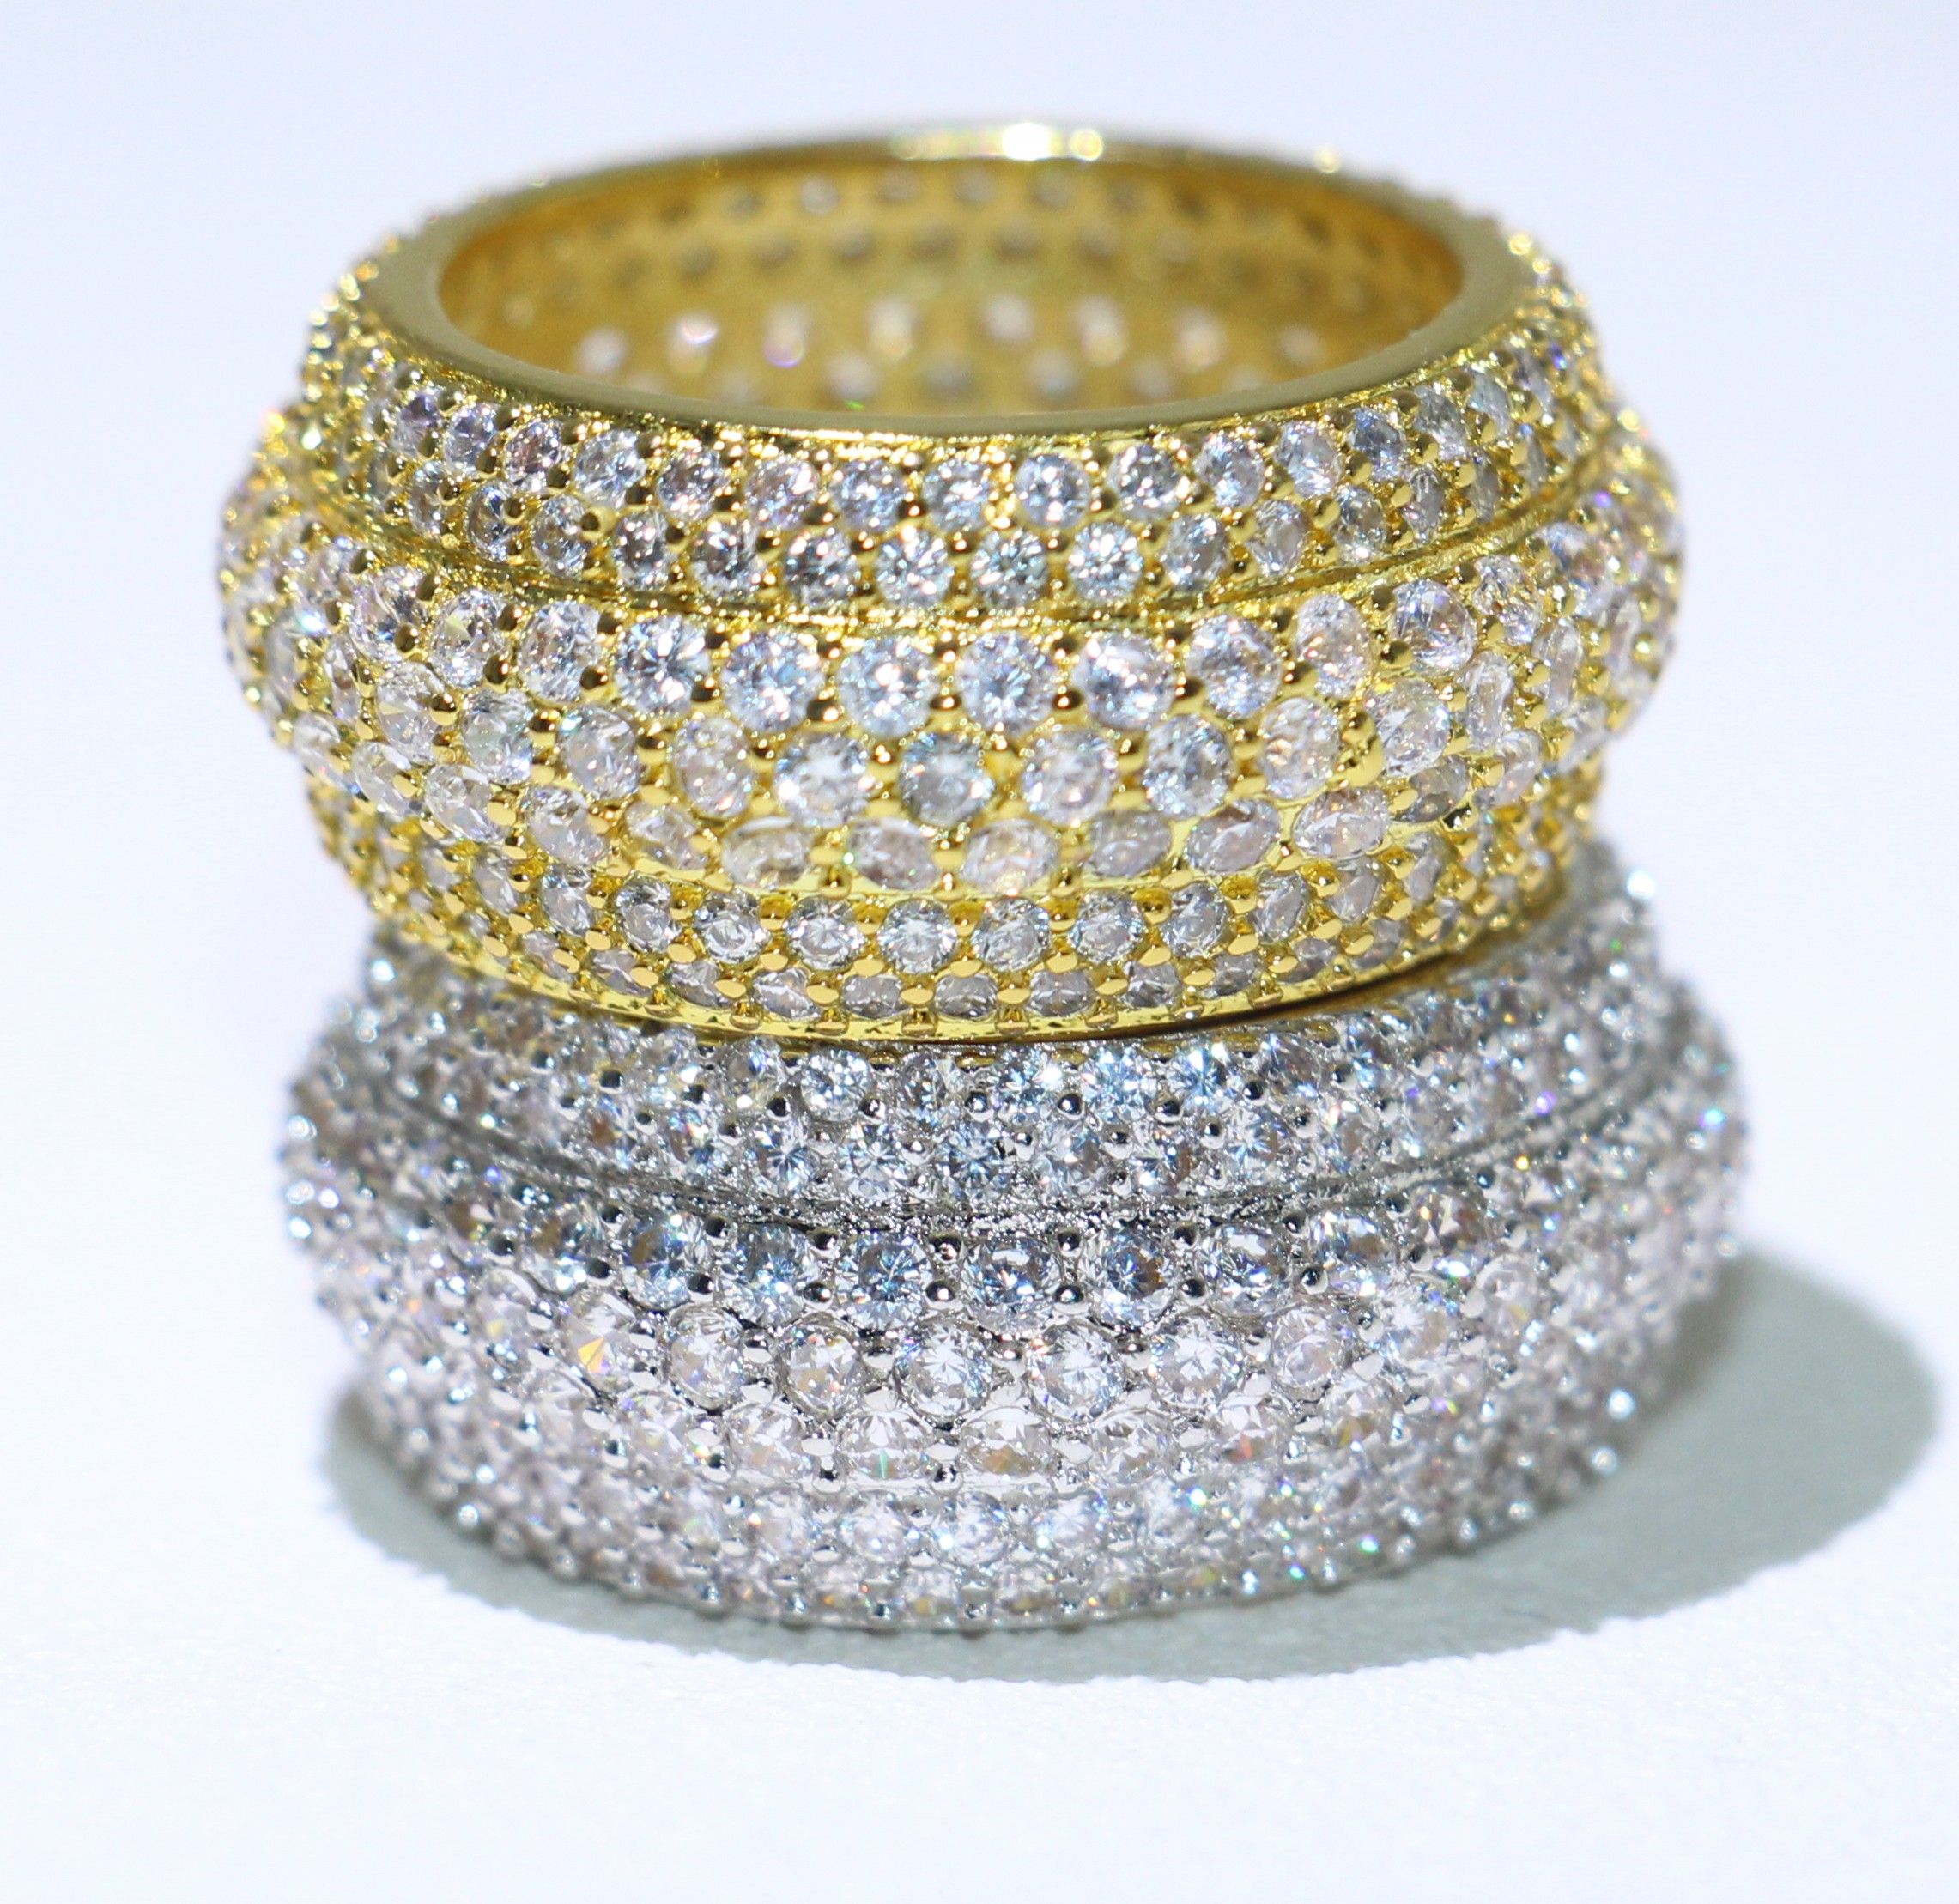 Sparkling المجوهرات الفاخرة 925 الاسترليني silvergold مملحة تمهيد كامل الأبيض الياقوت الوعد mircro تشيكوسلوفاكيا الماس المرأة الزفاف الفرقة حلقة هدية